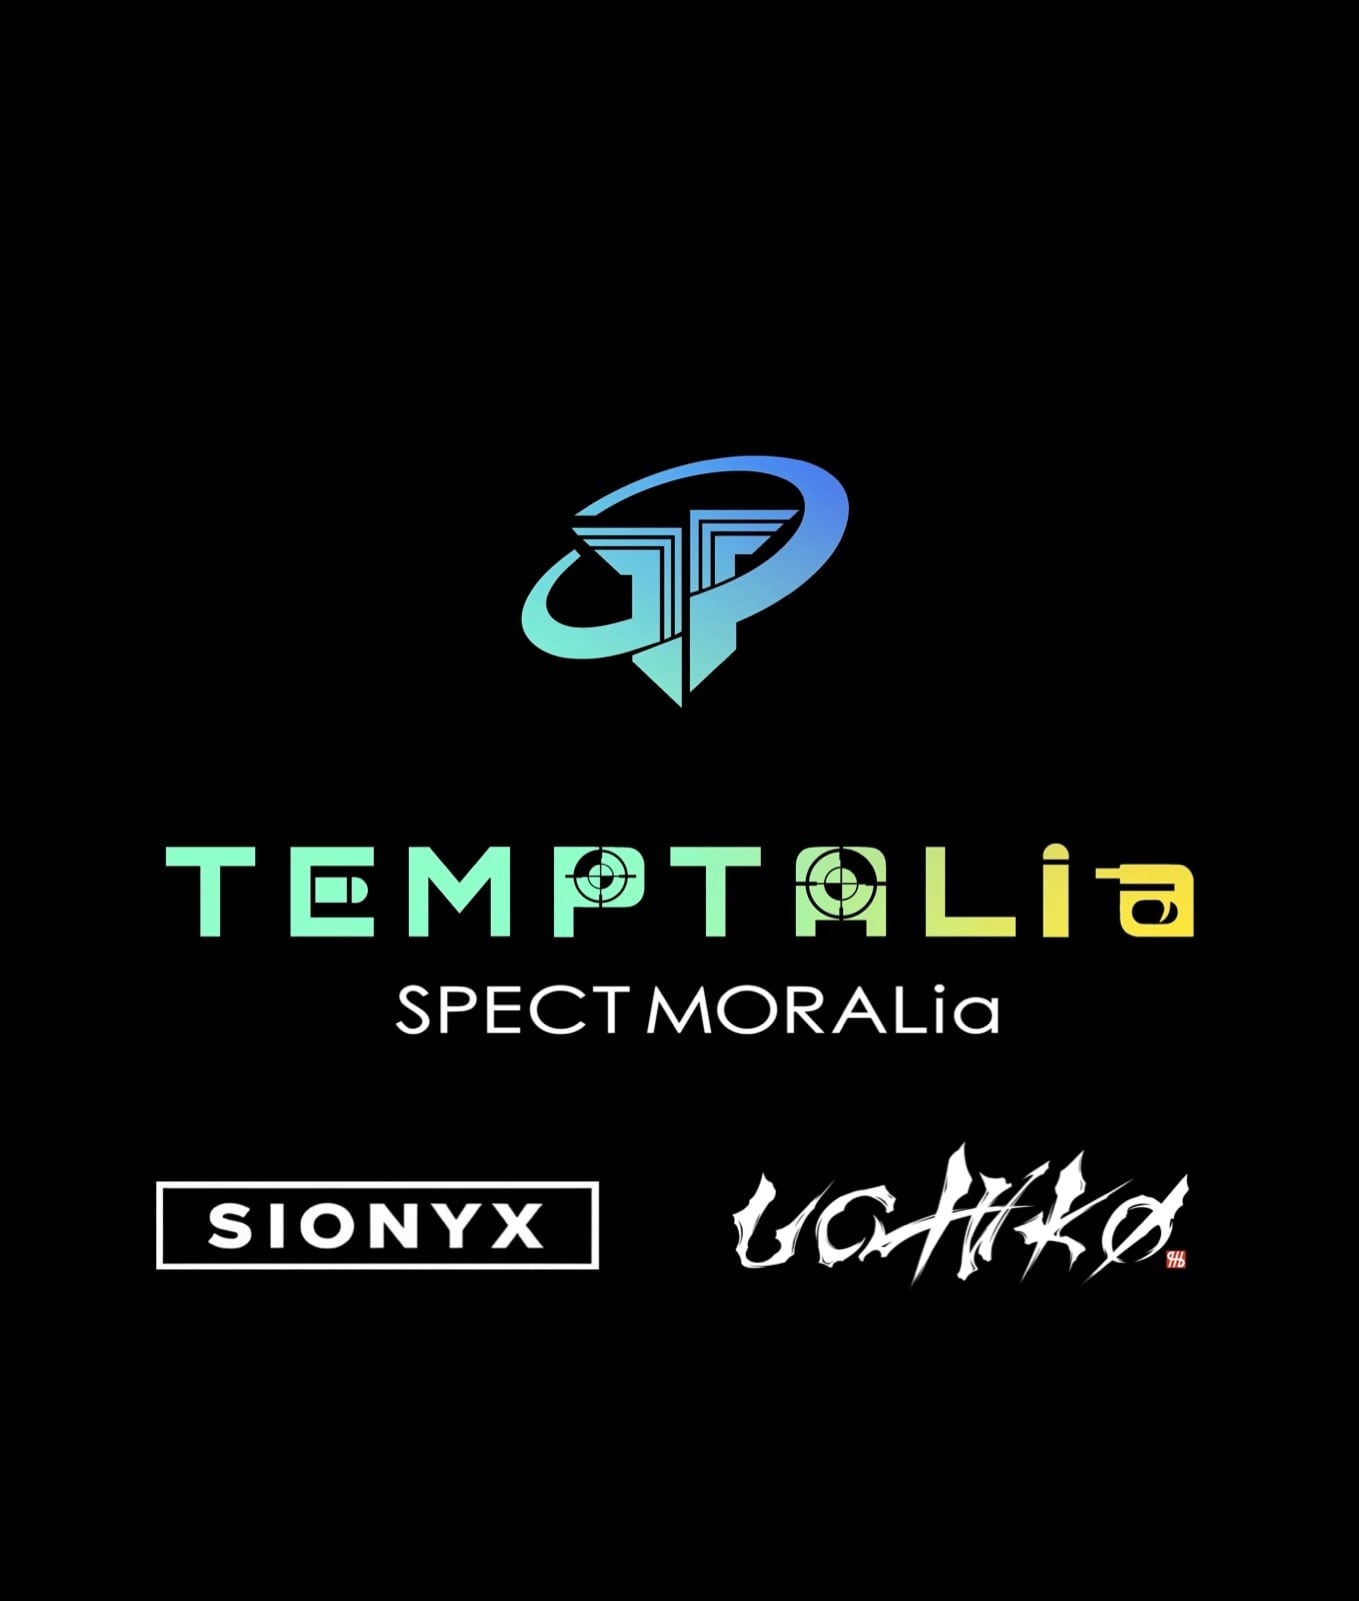 TEMPTALia / SPECTALia / uchiko / Tsblades